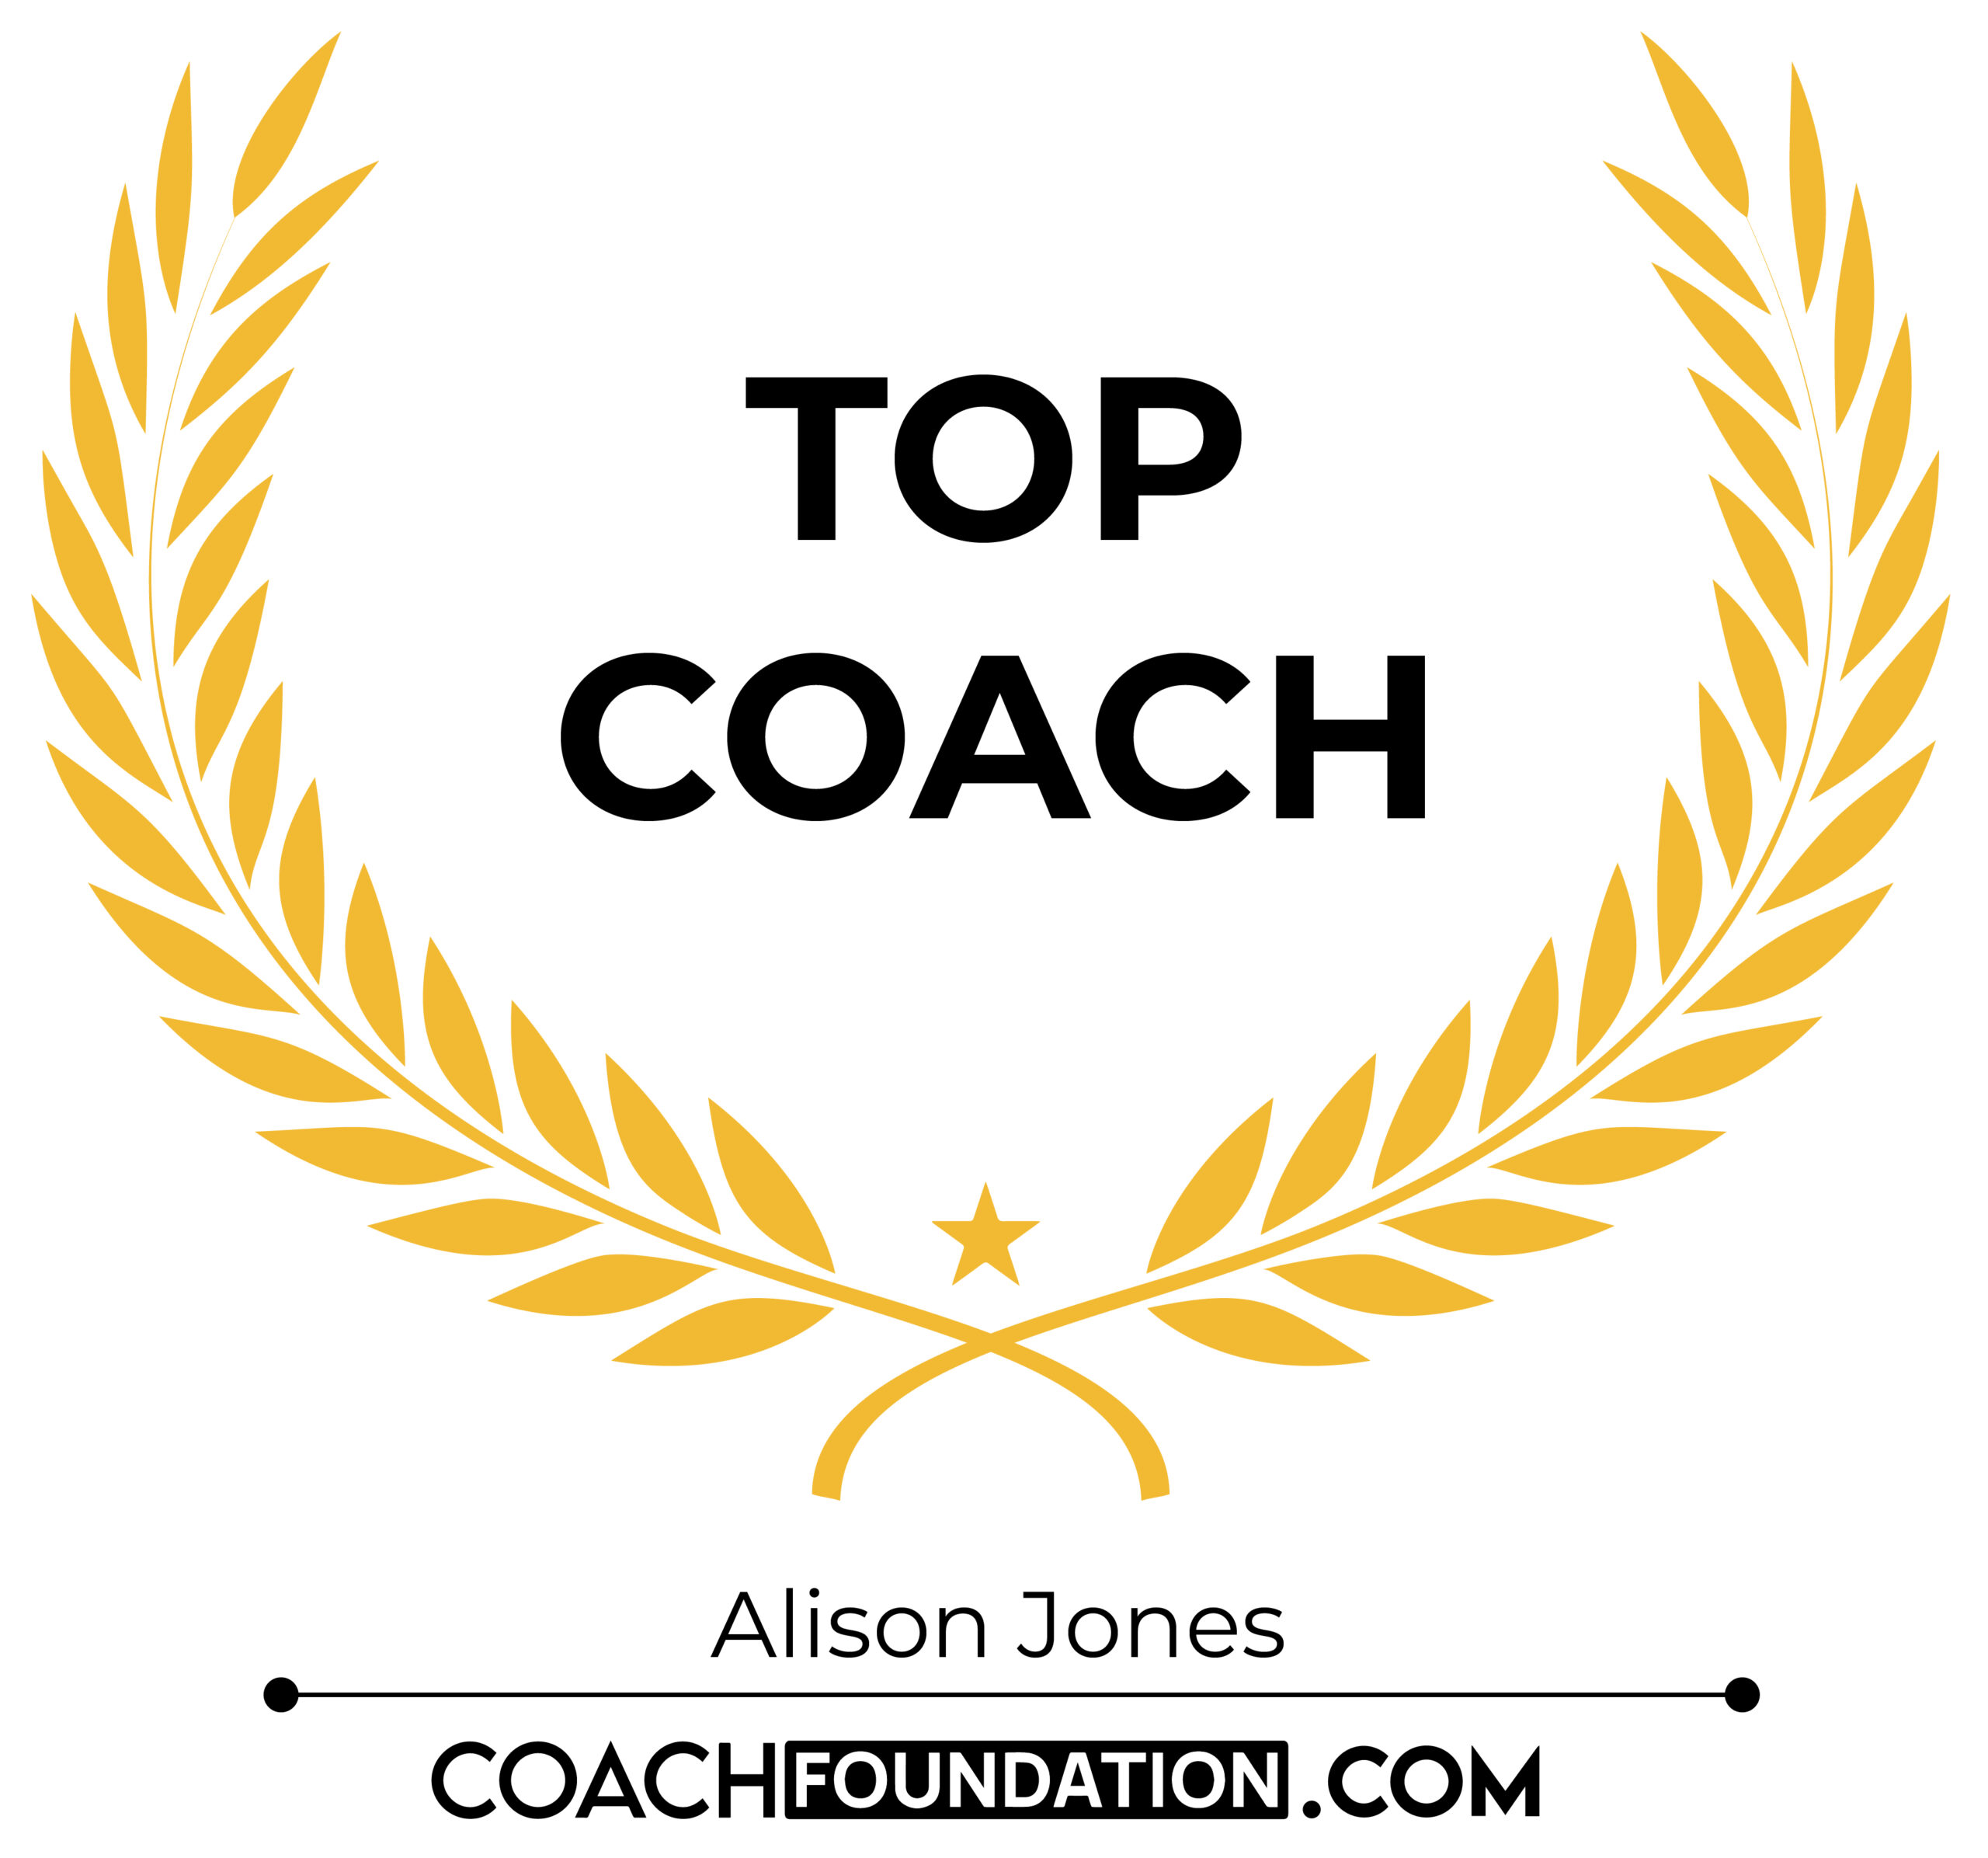 Coach Foundation Alison Jones Top Coach badge